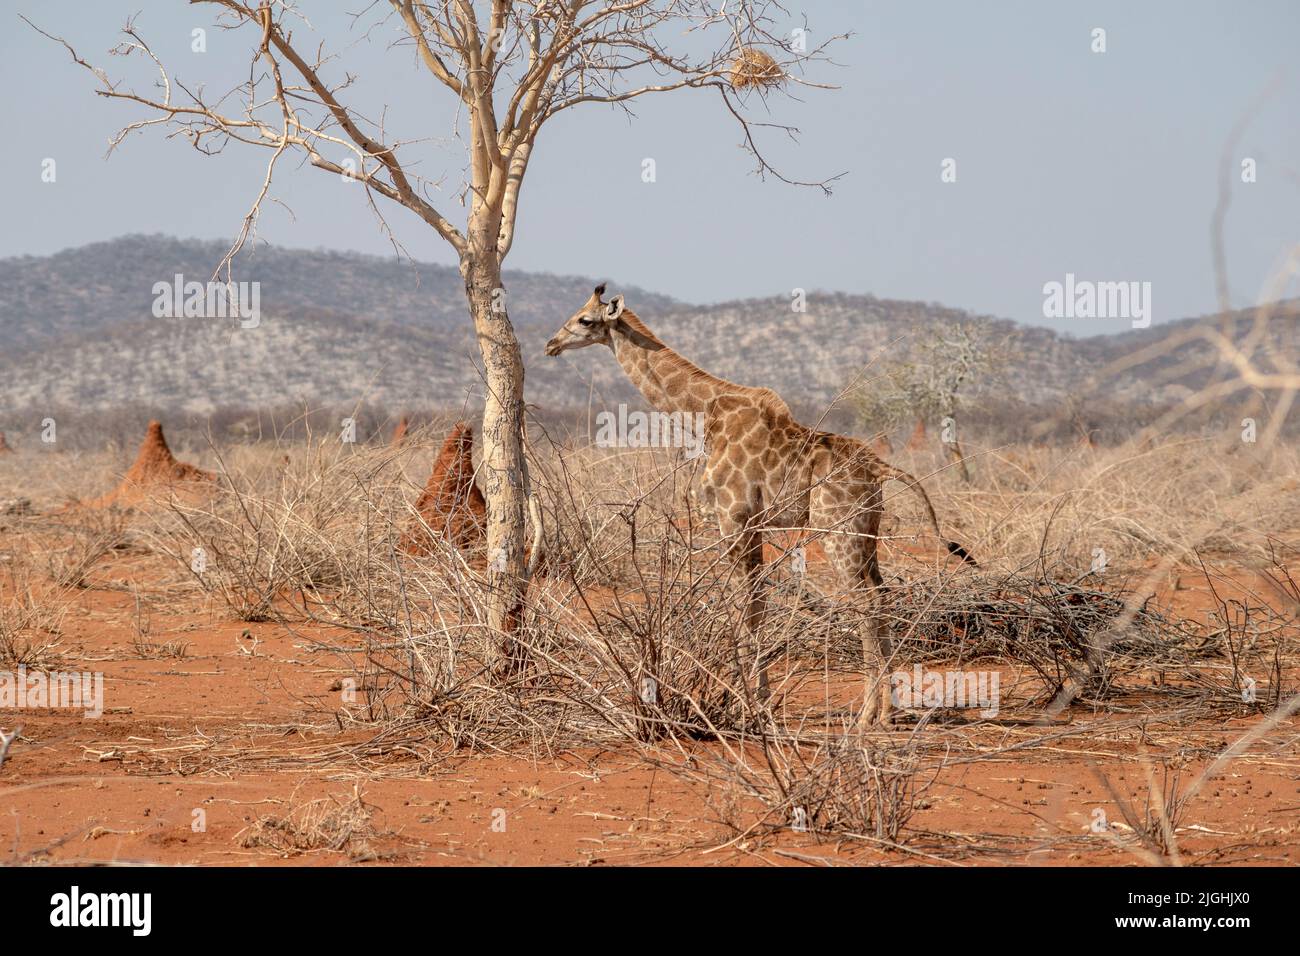 giraffe calf eating tree branches in desert of Namibia Stock Photo